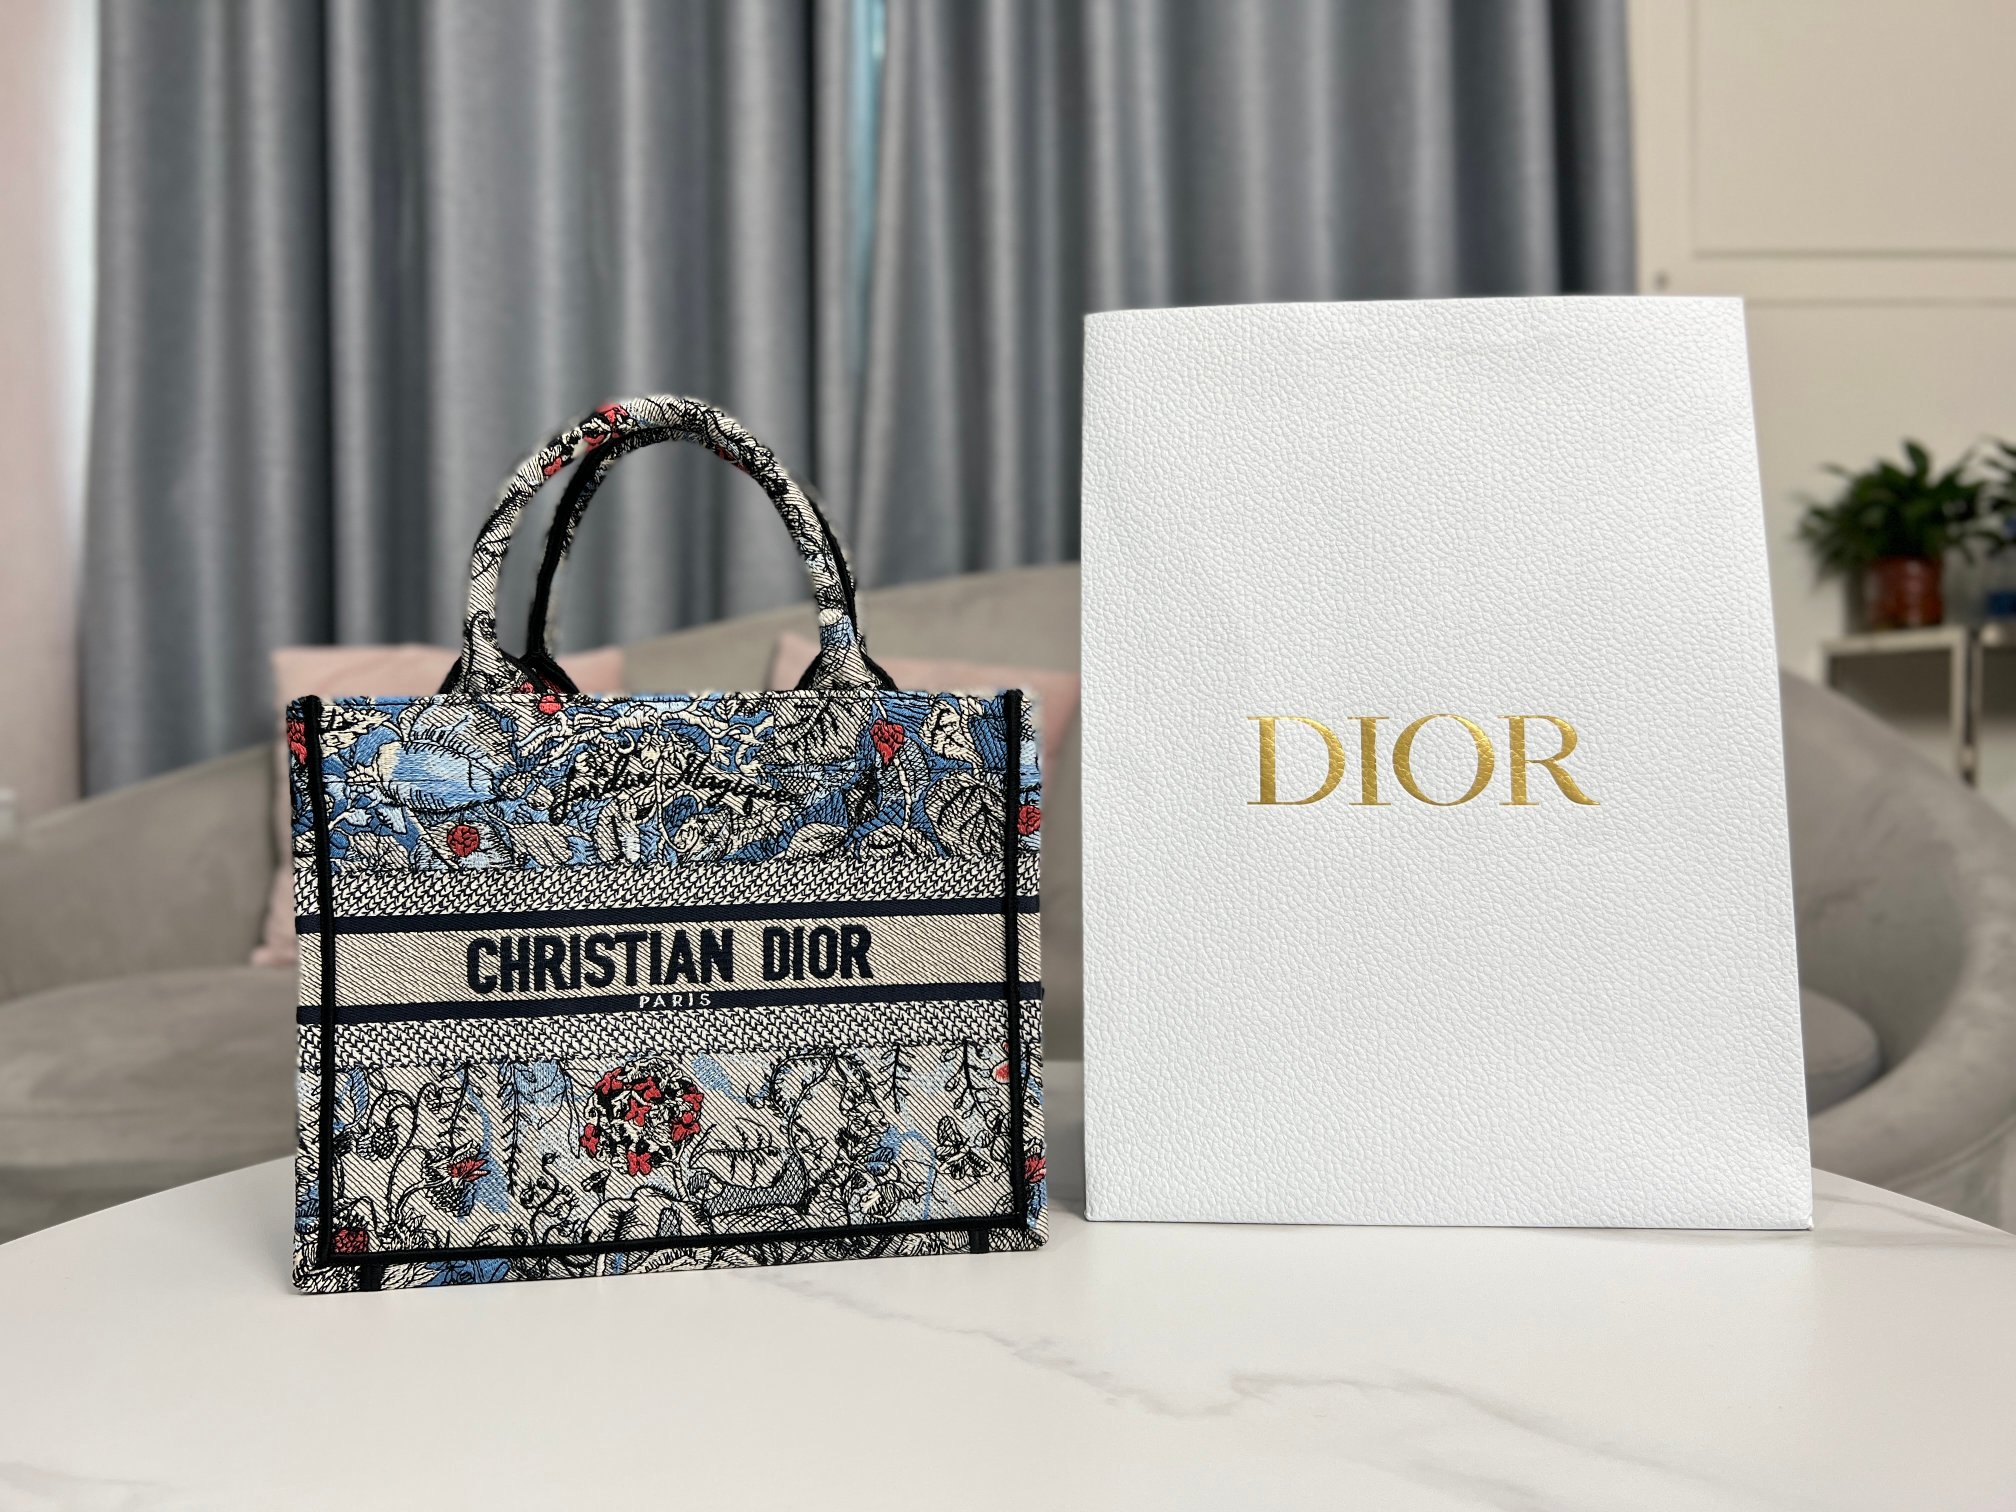 Dior Book Tote Luxury
 Handbags Tote Bags Denim Blue Embroidery